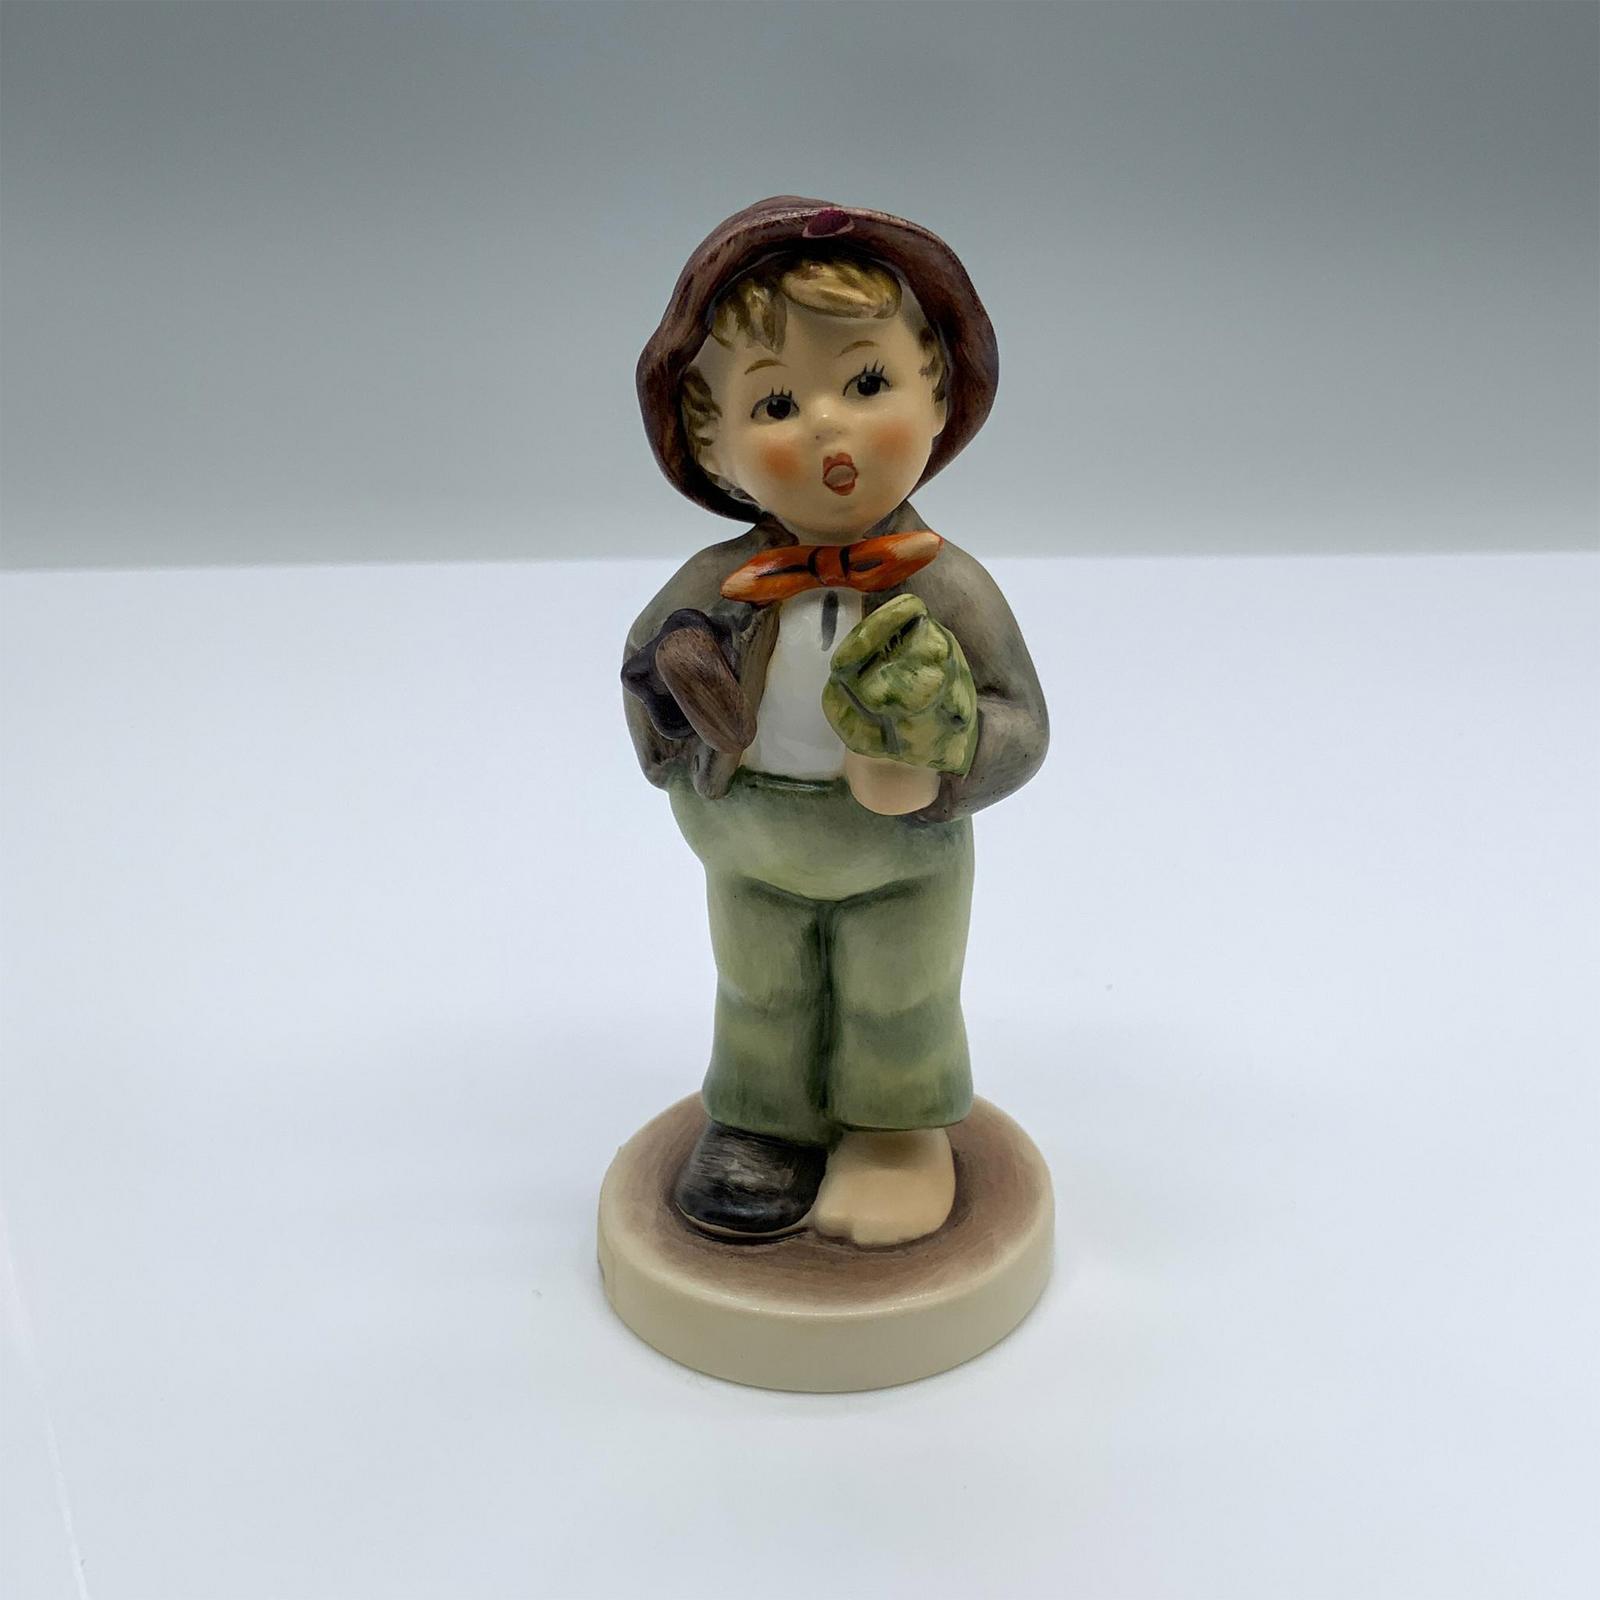 Lost Stocking, Hummel, Goebel, Figurine, Ceramic, Boy, Germany